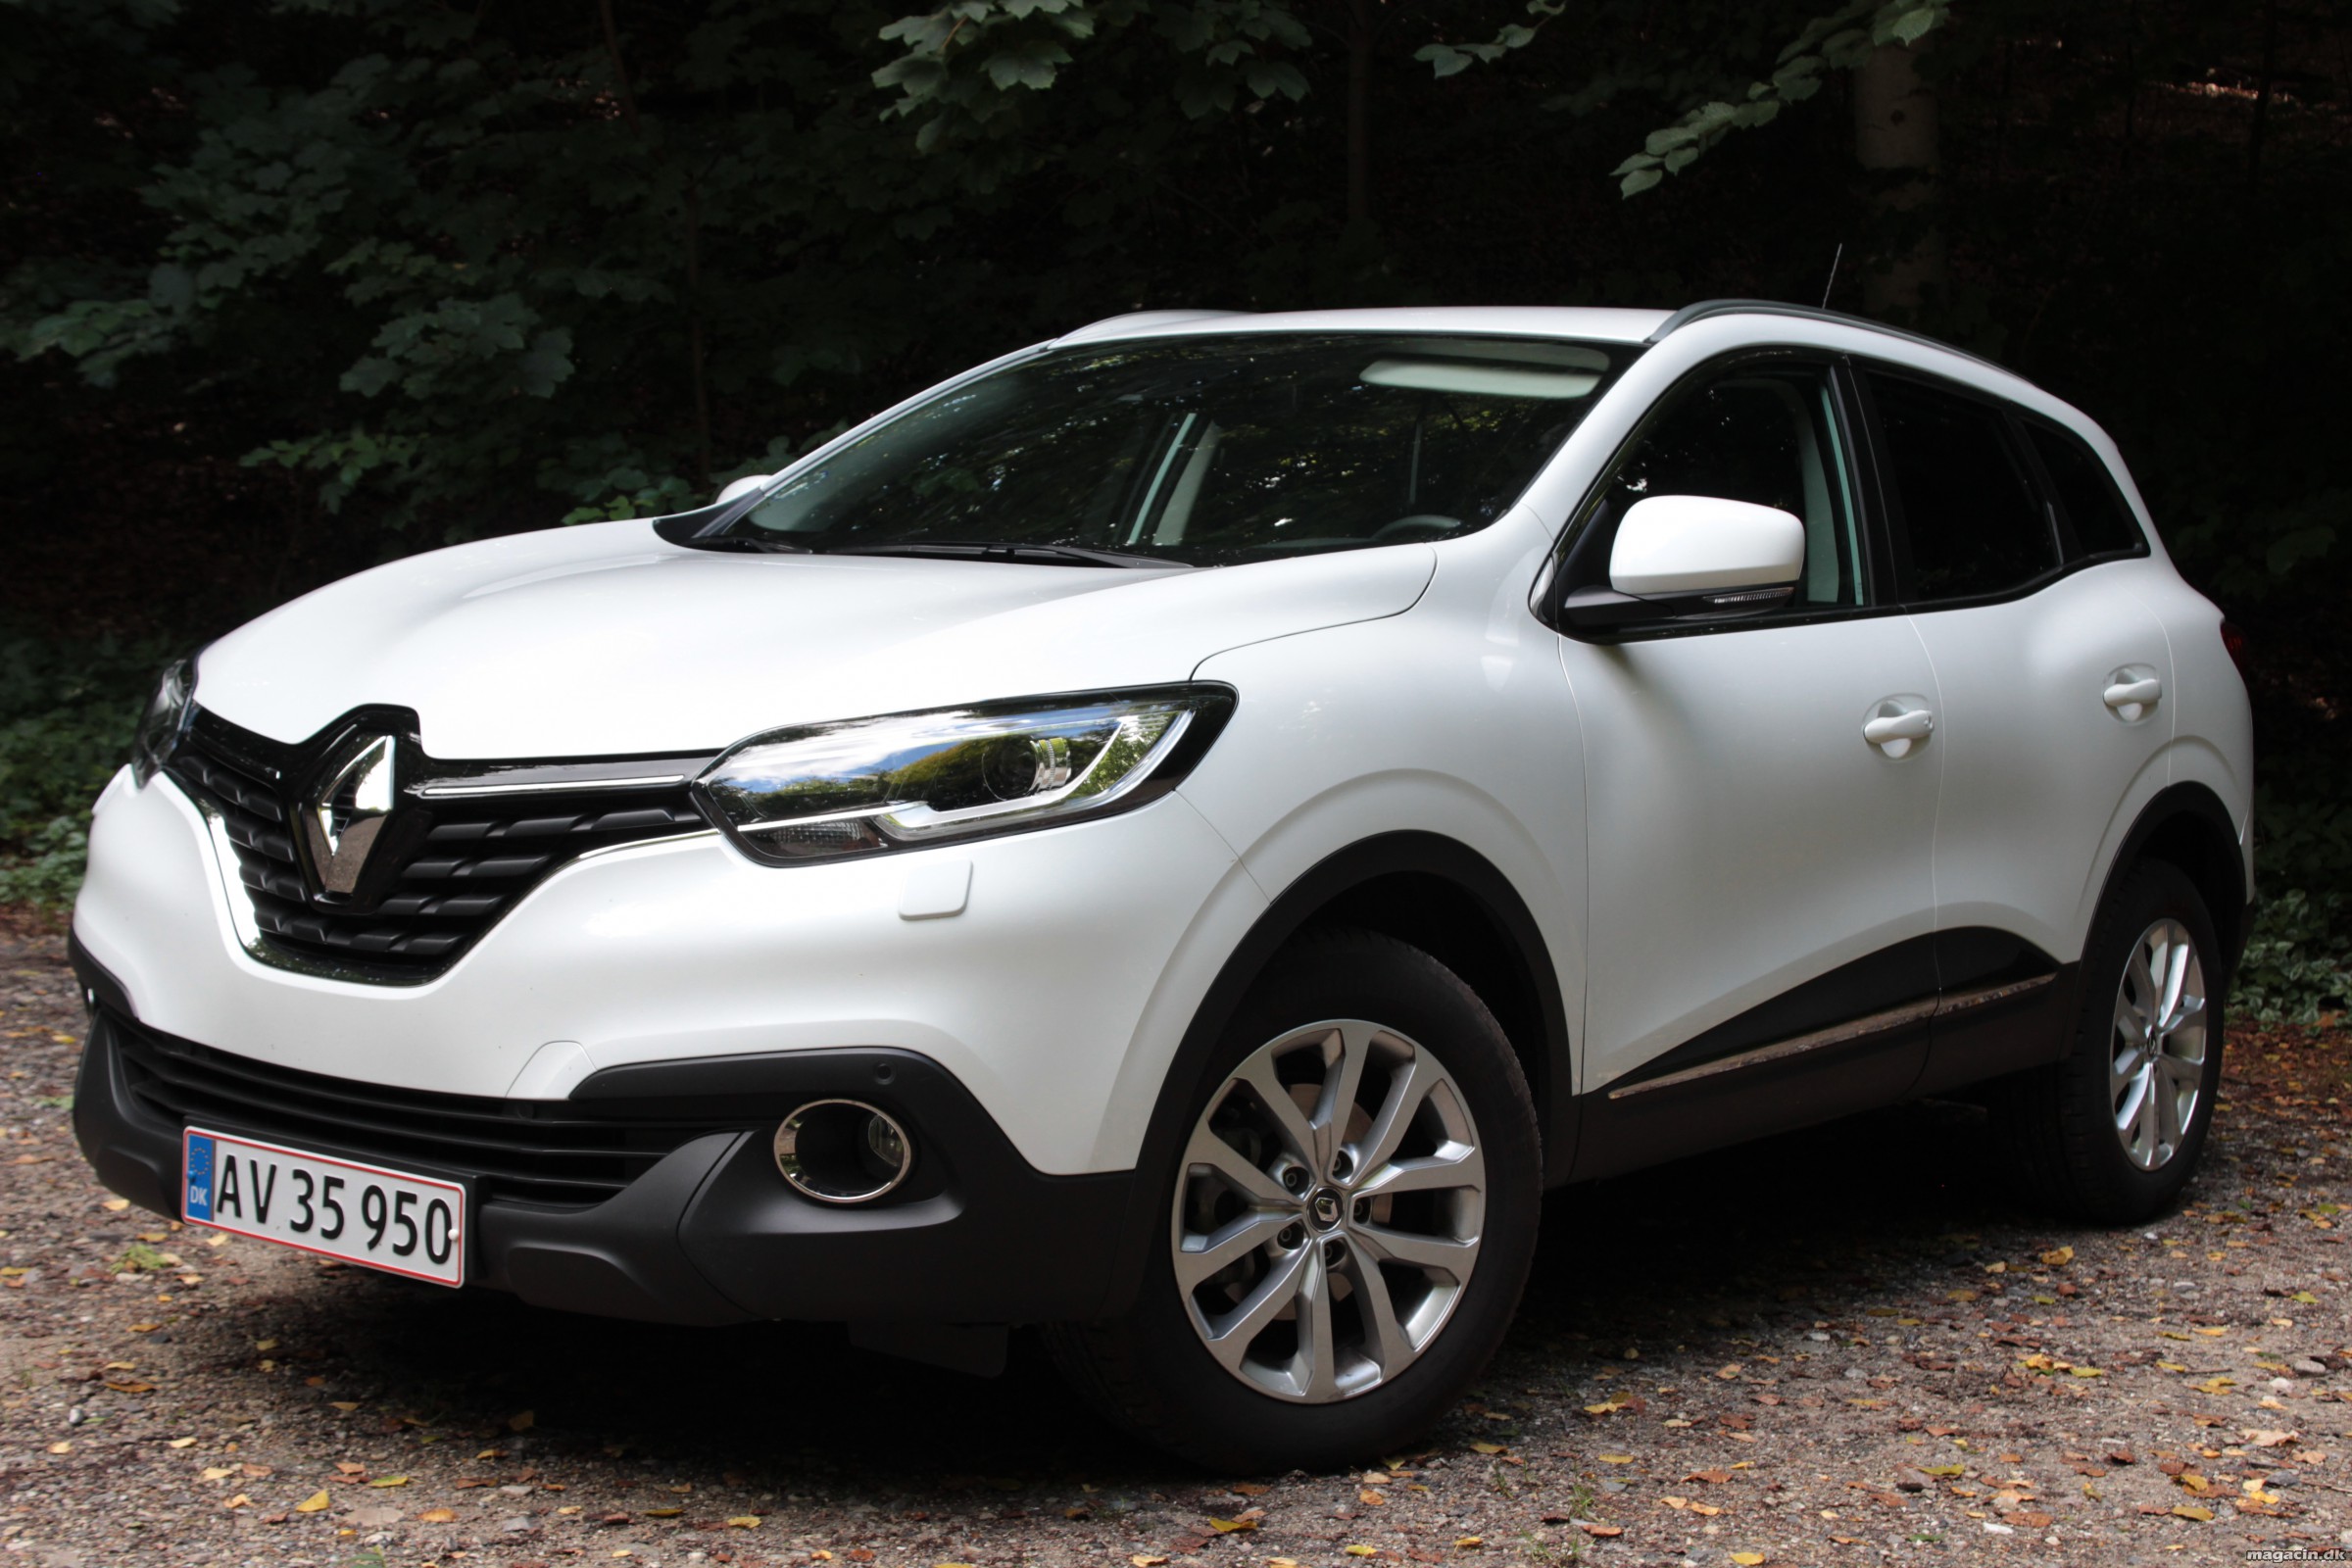 Test: Renault Kadjar – lige så god som Qashqai